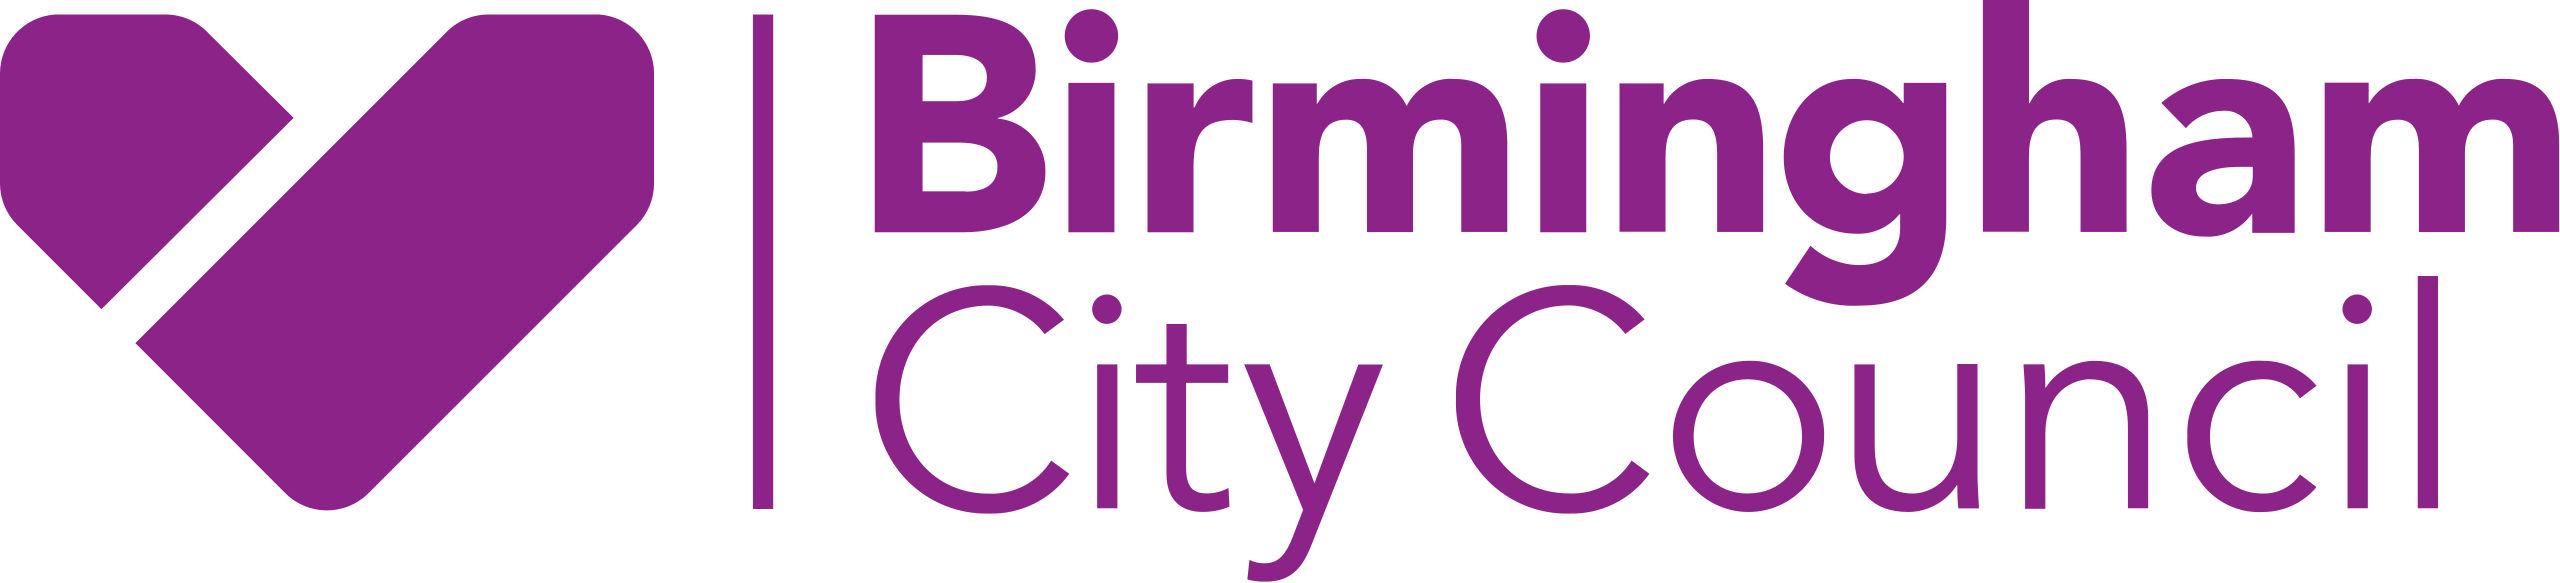 Birmingham_City_Council_logo